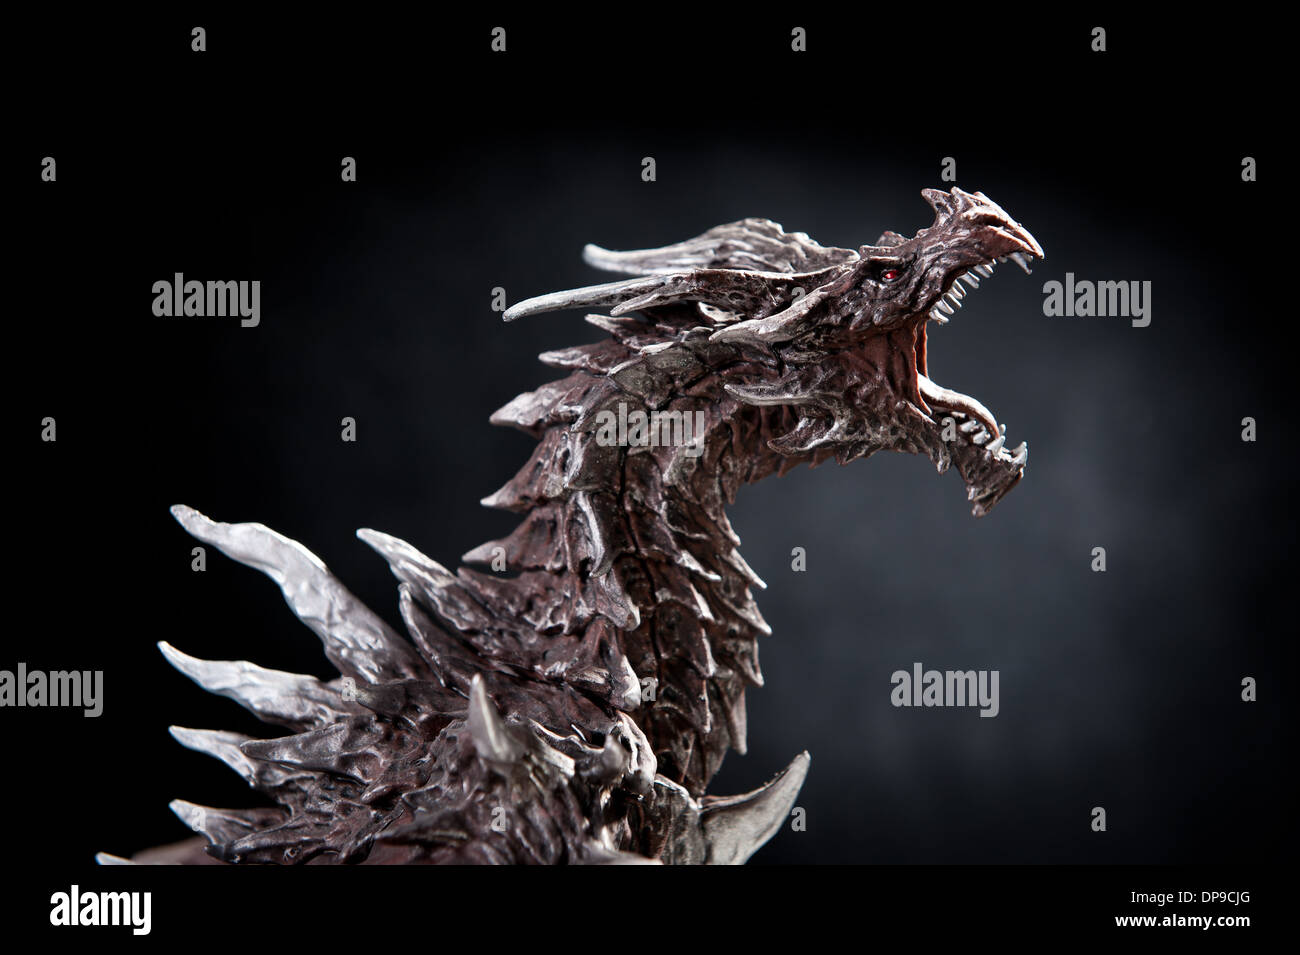 Alduin Dragon Portrait From Skyrim Game Stock Photo Alamy